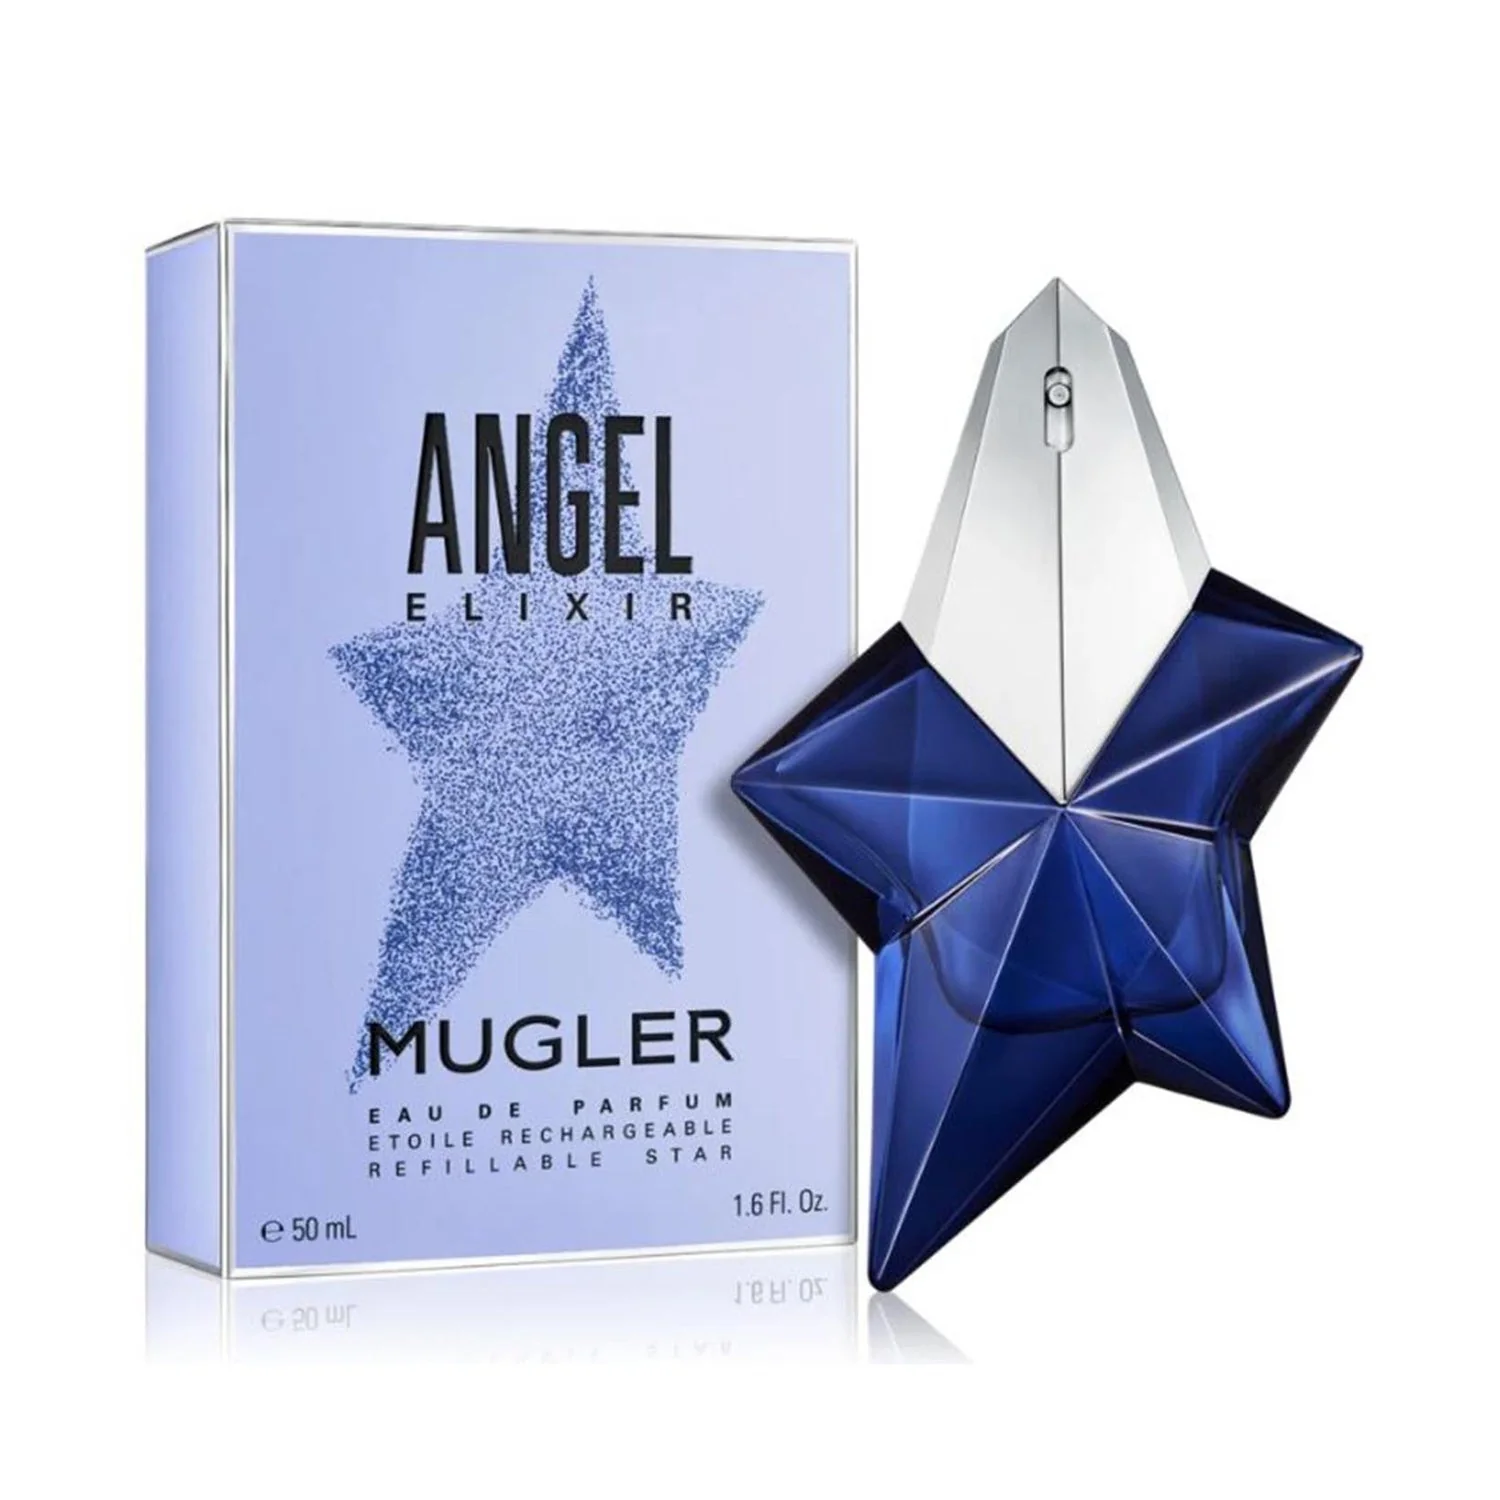 Thierry Mugler Angel Elixir Refillable Edp 50 ml - 1